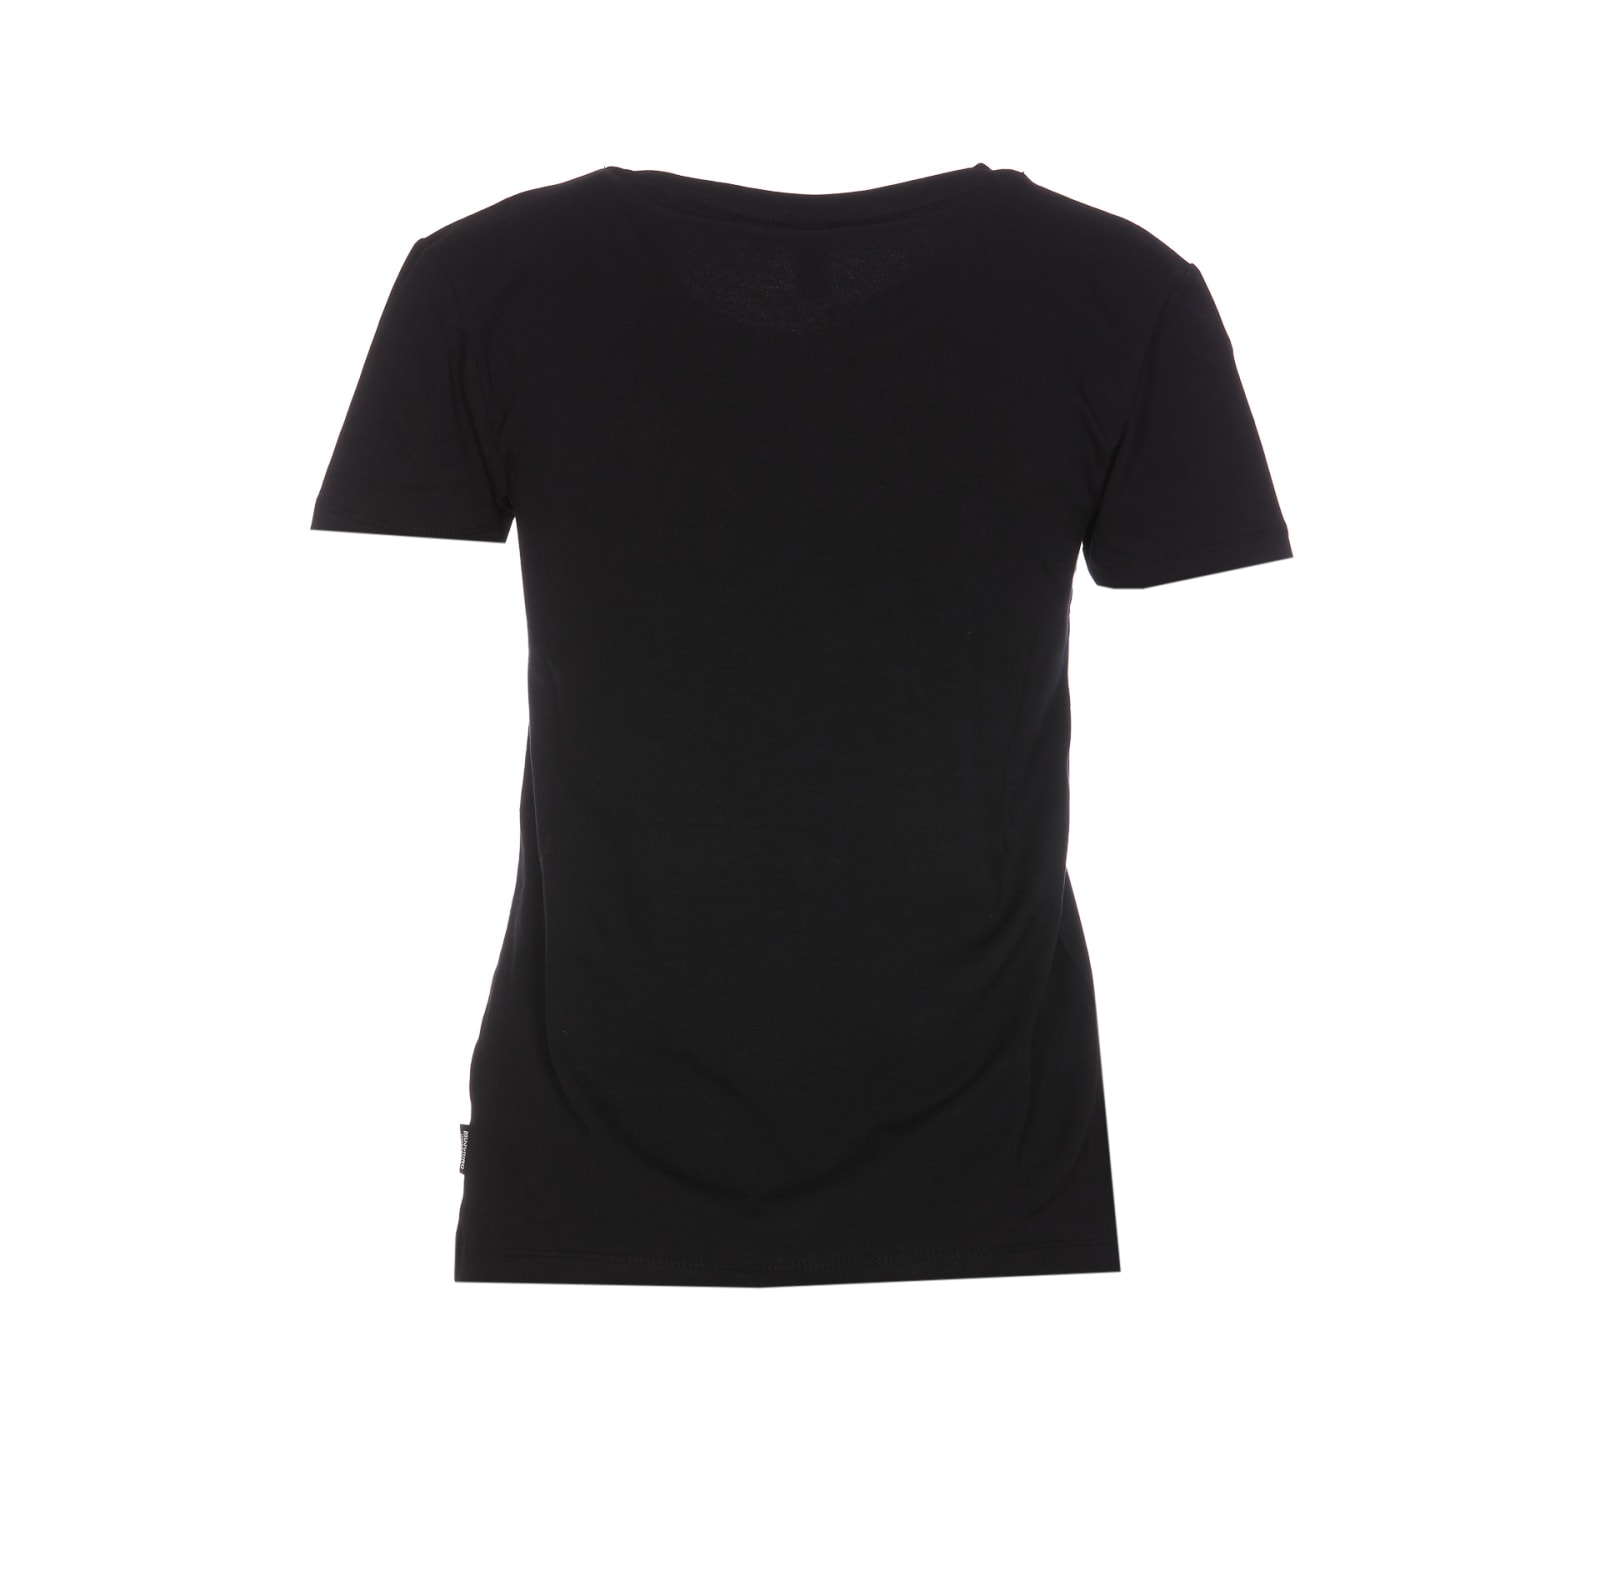 Shop Moschino Underbear Logo T-shirt In Black